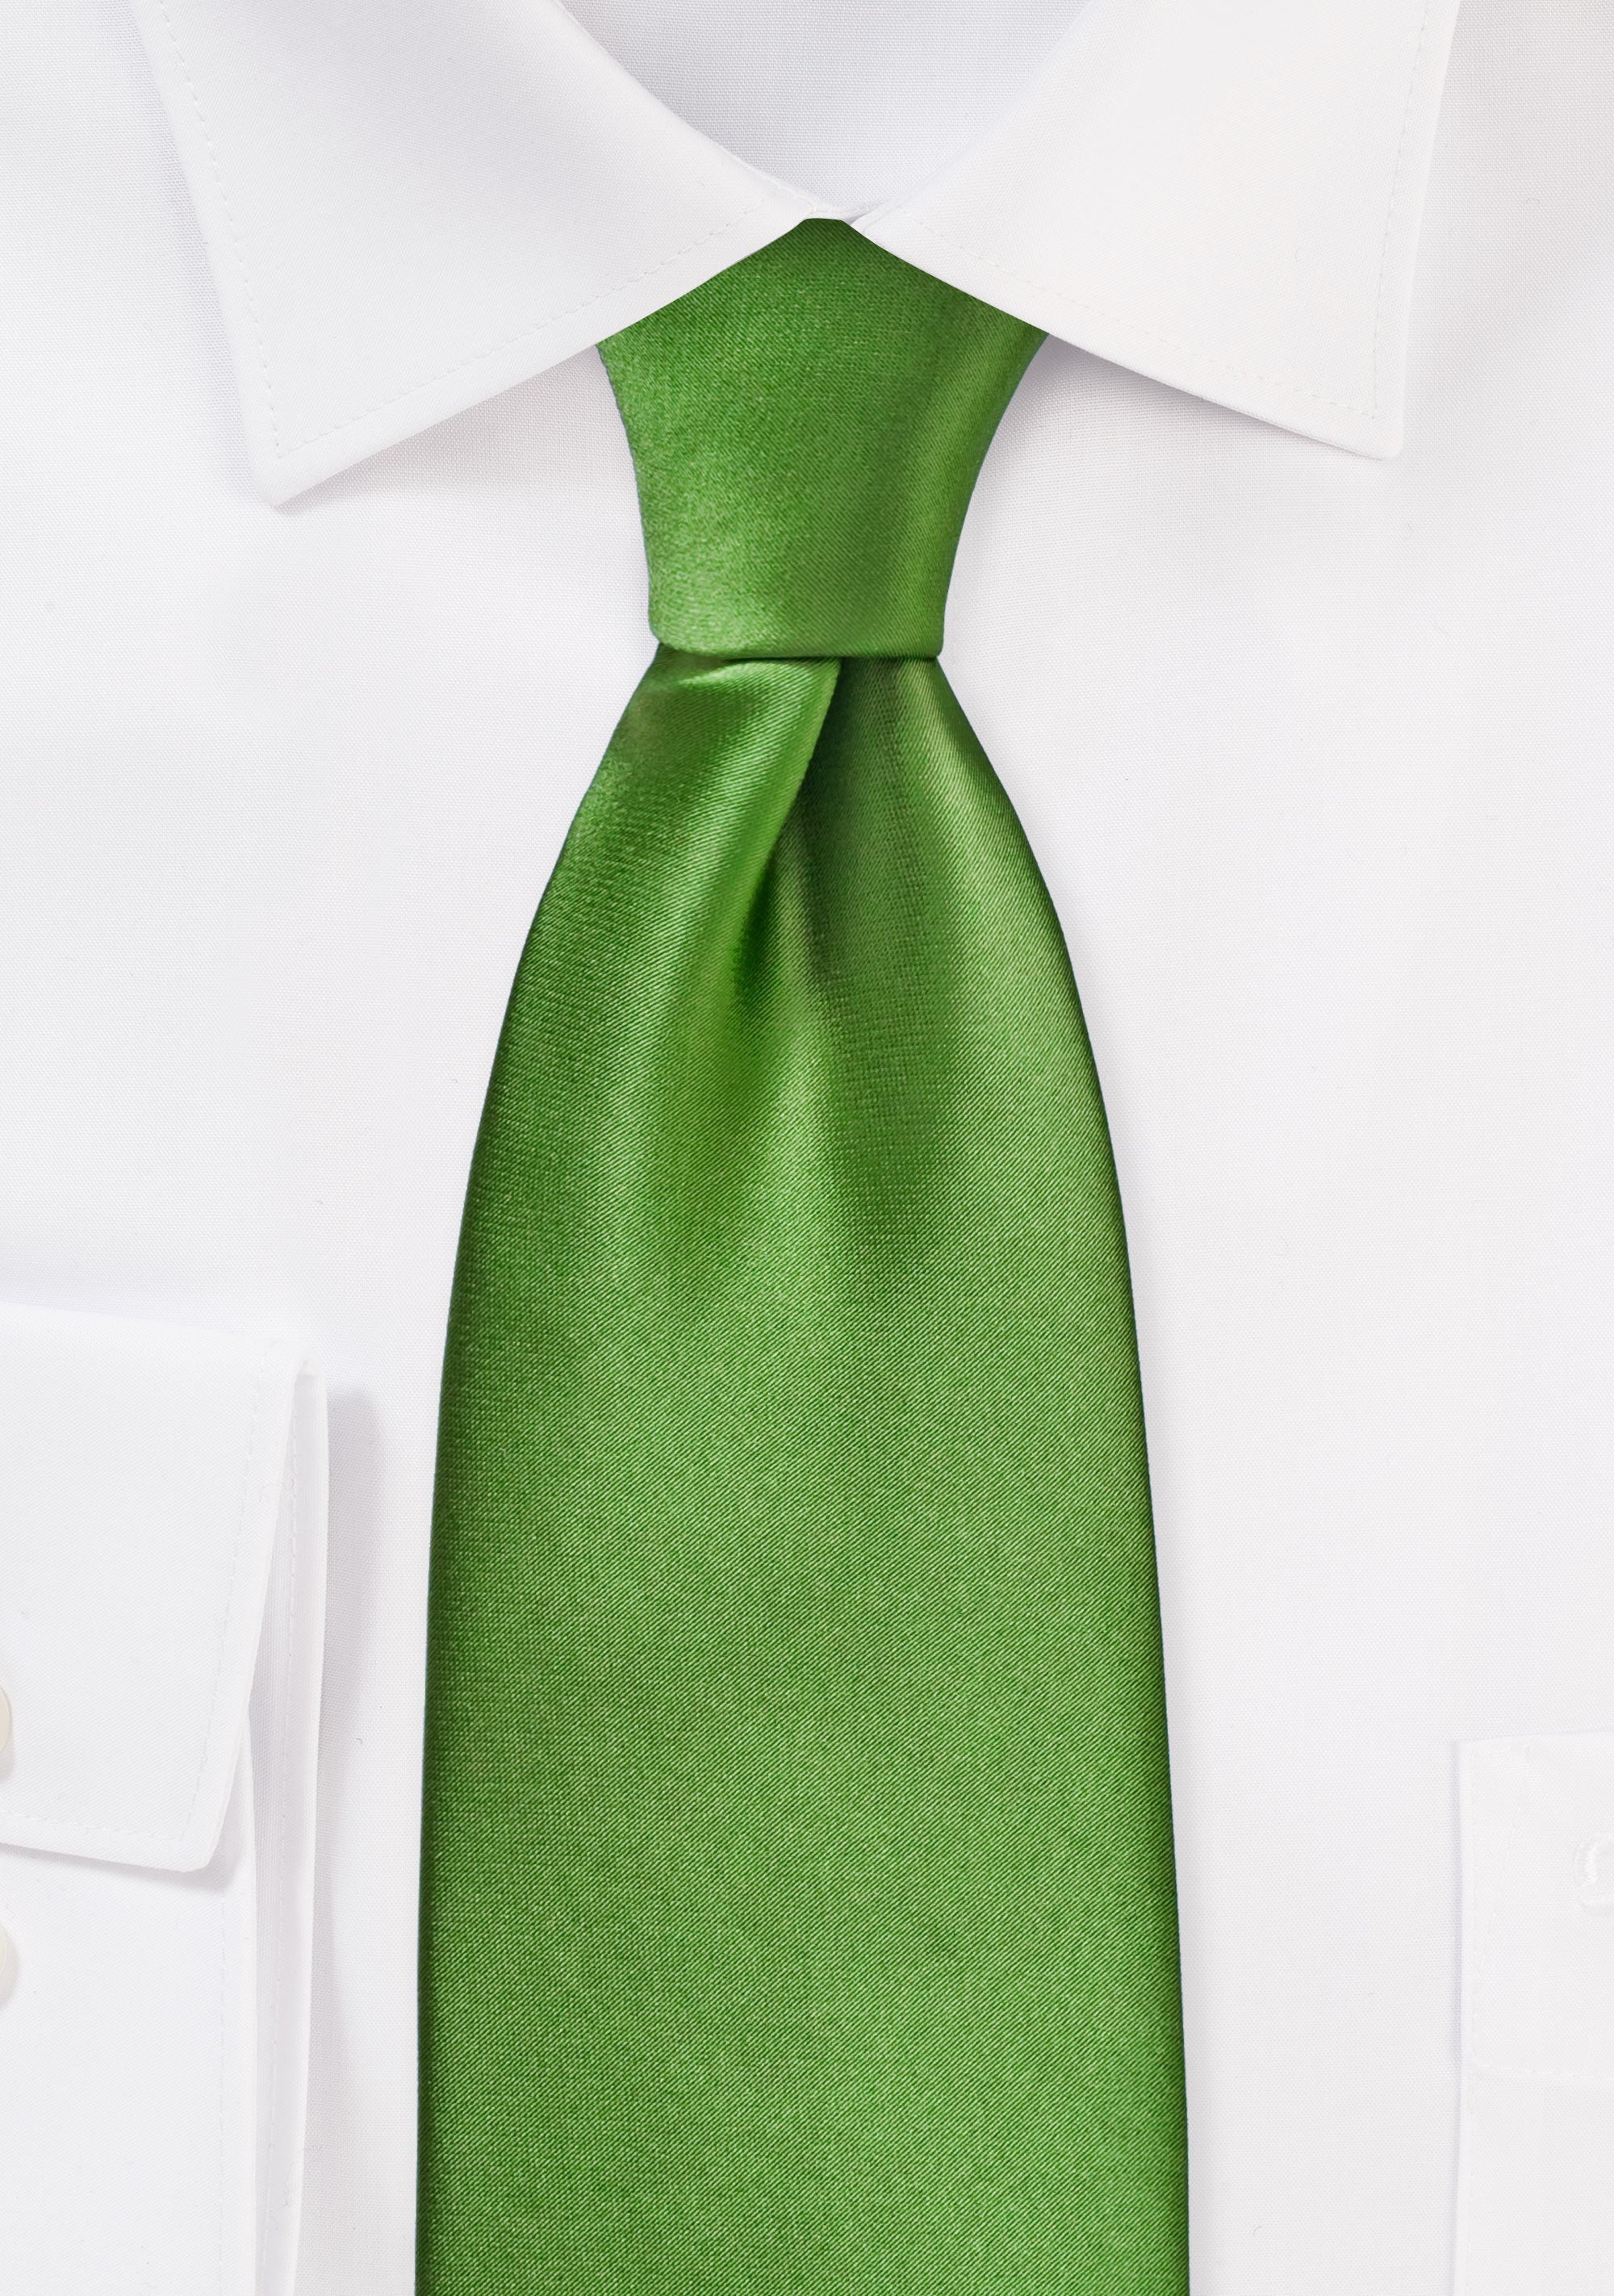 Clover Solid Necktie